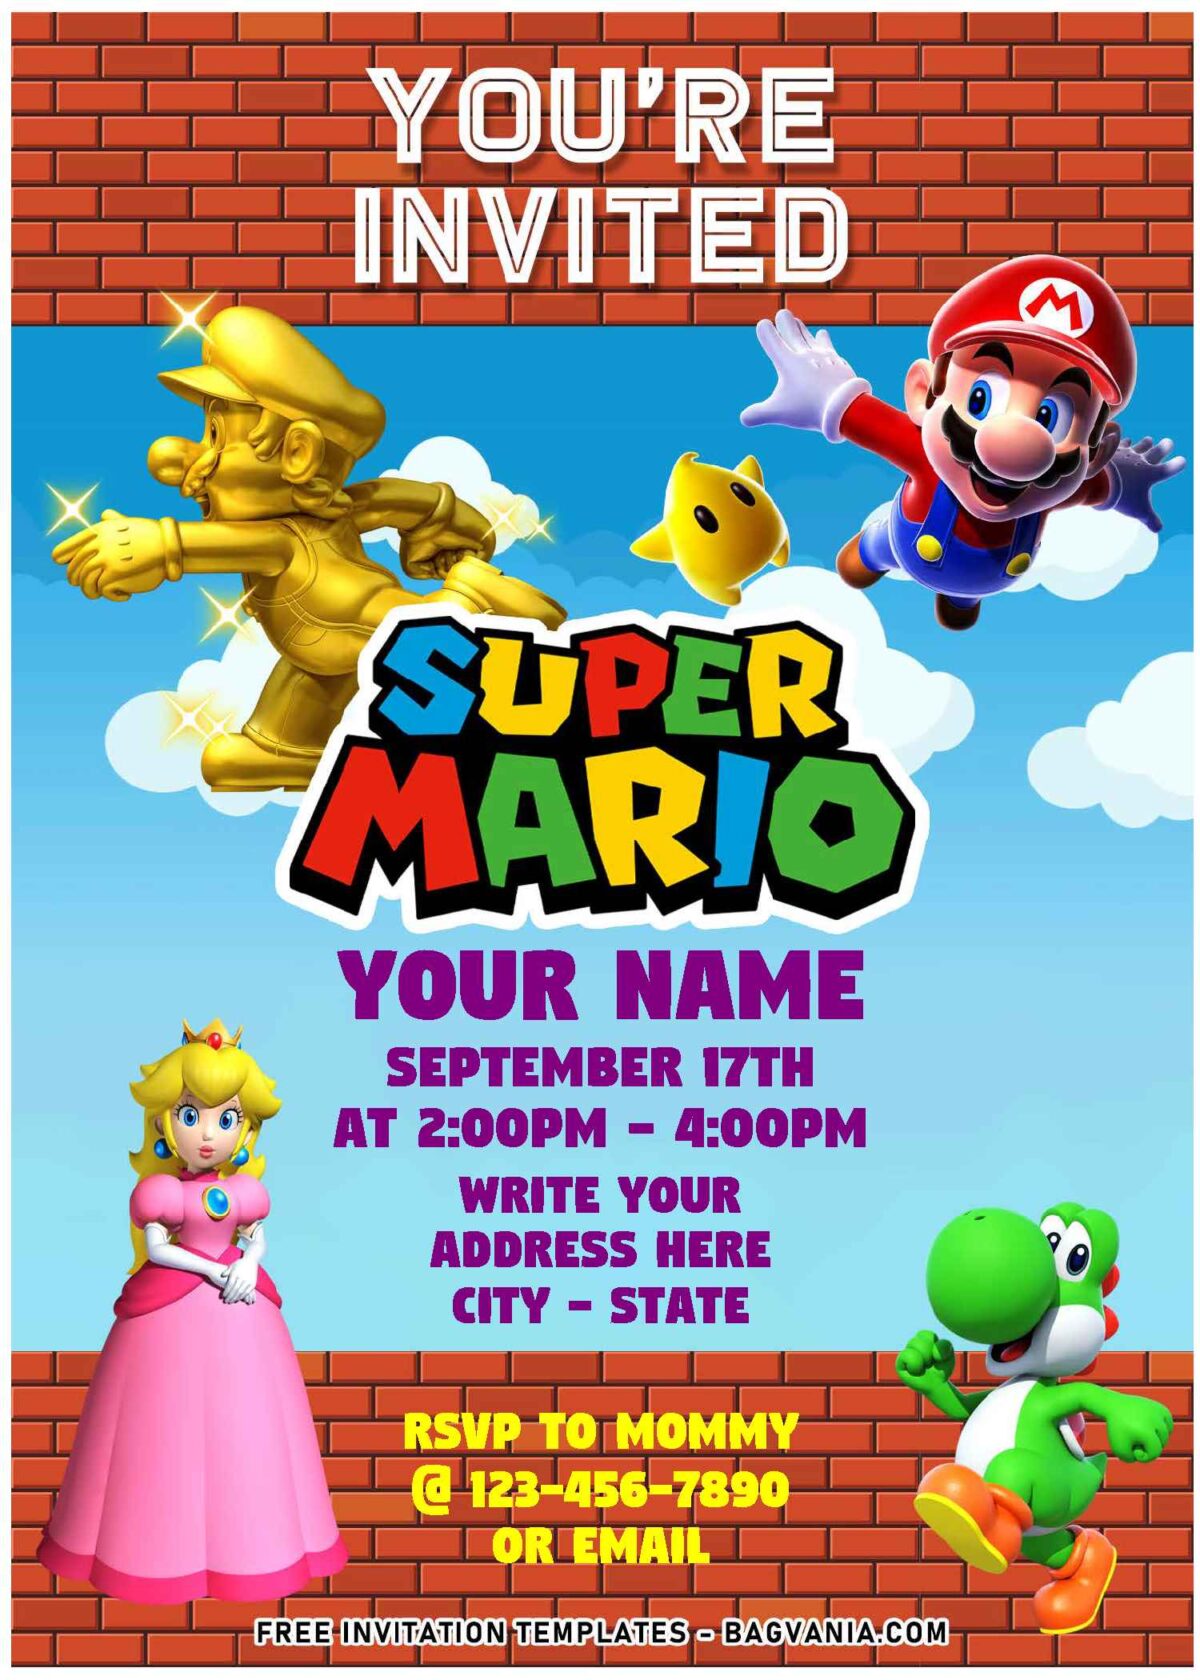 (Free Editable PDF) Super Mario Bros Sunshine Birthday Invitation Templates with Golden Mario Statue